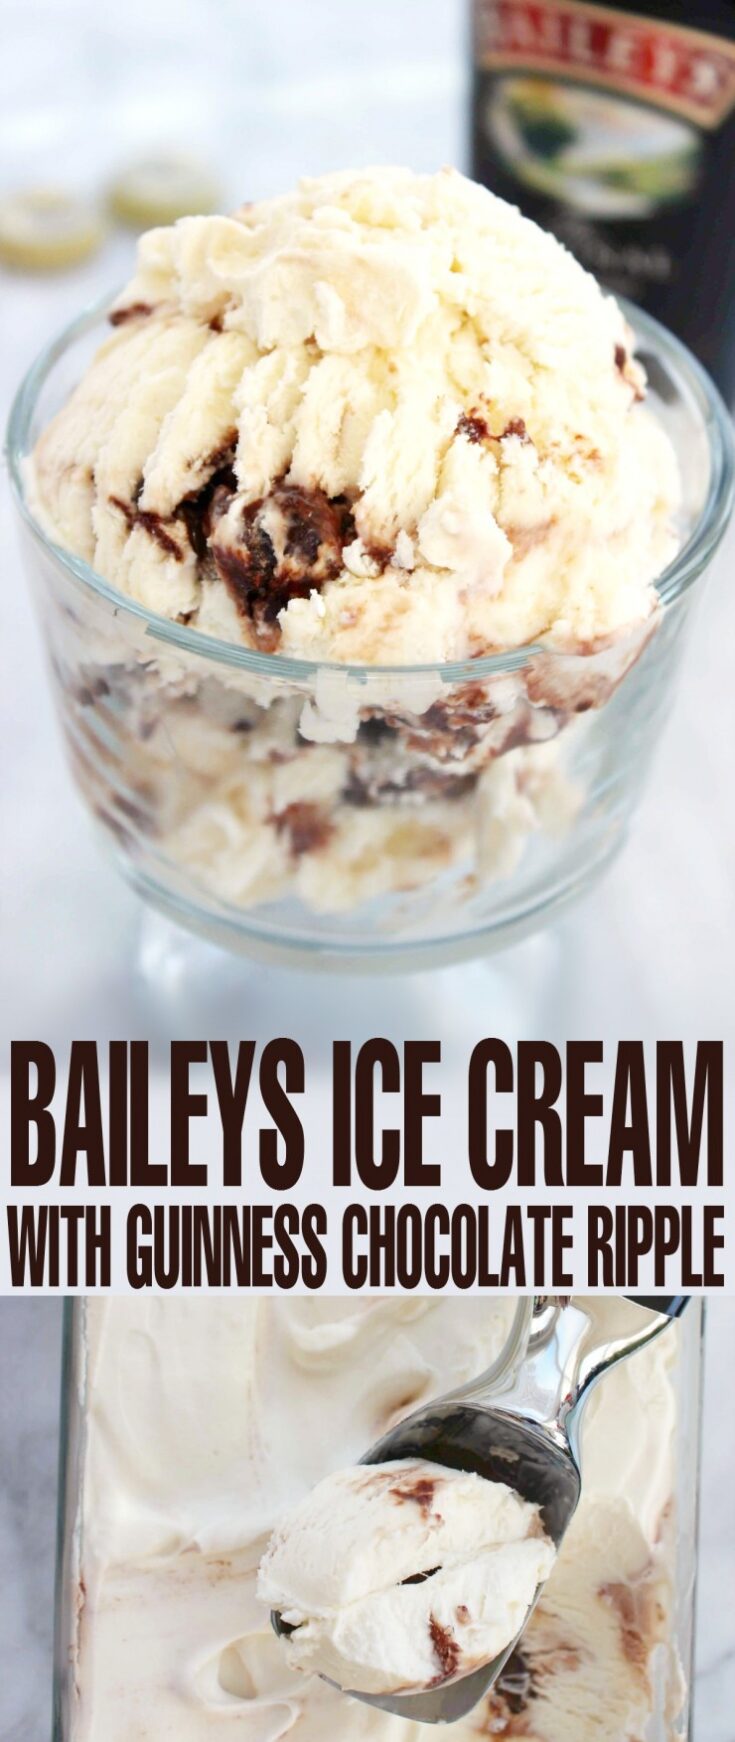 Baileys Ice Cream with Guinness Chocolate Ripple